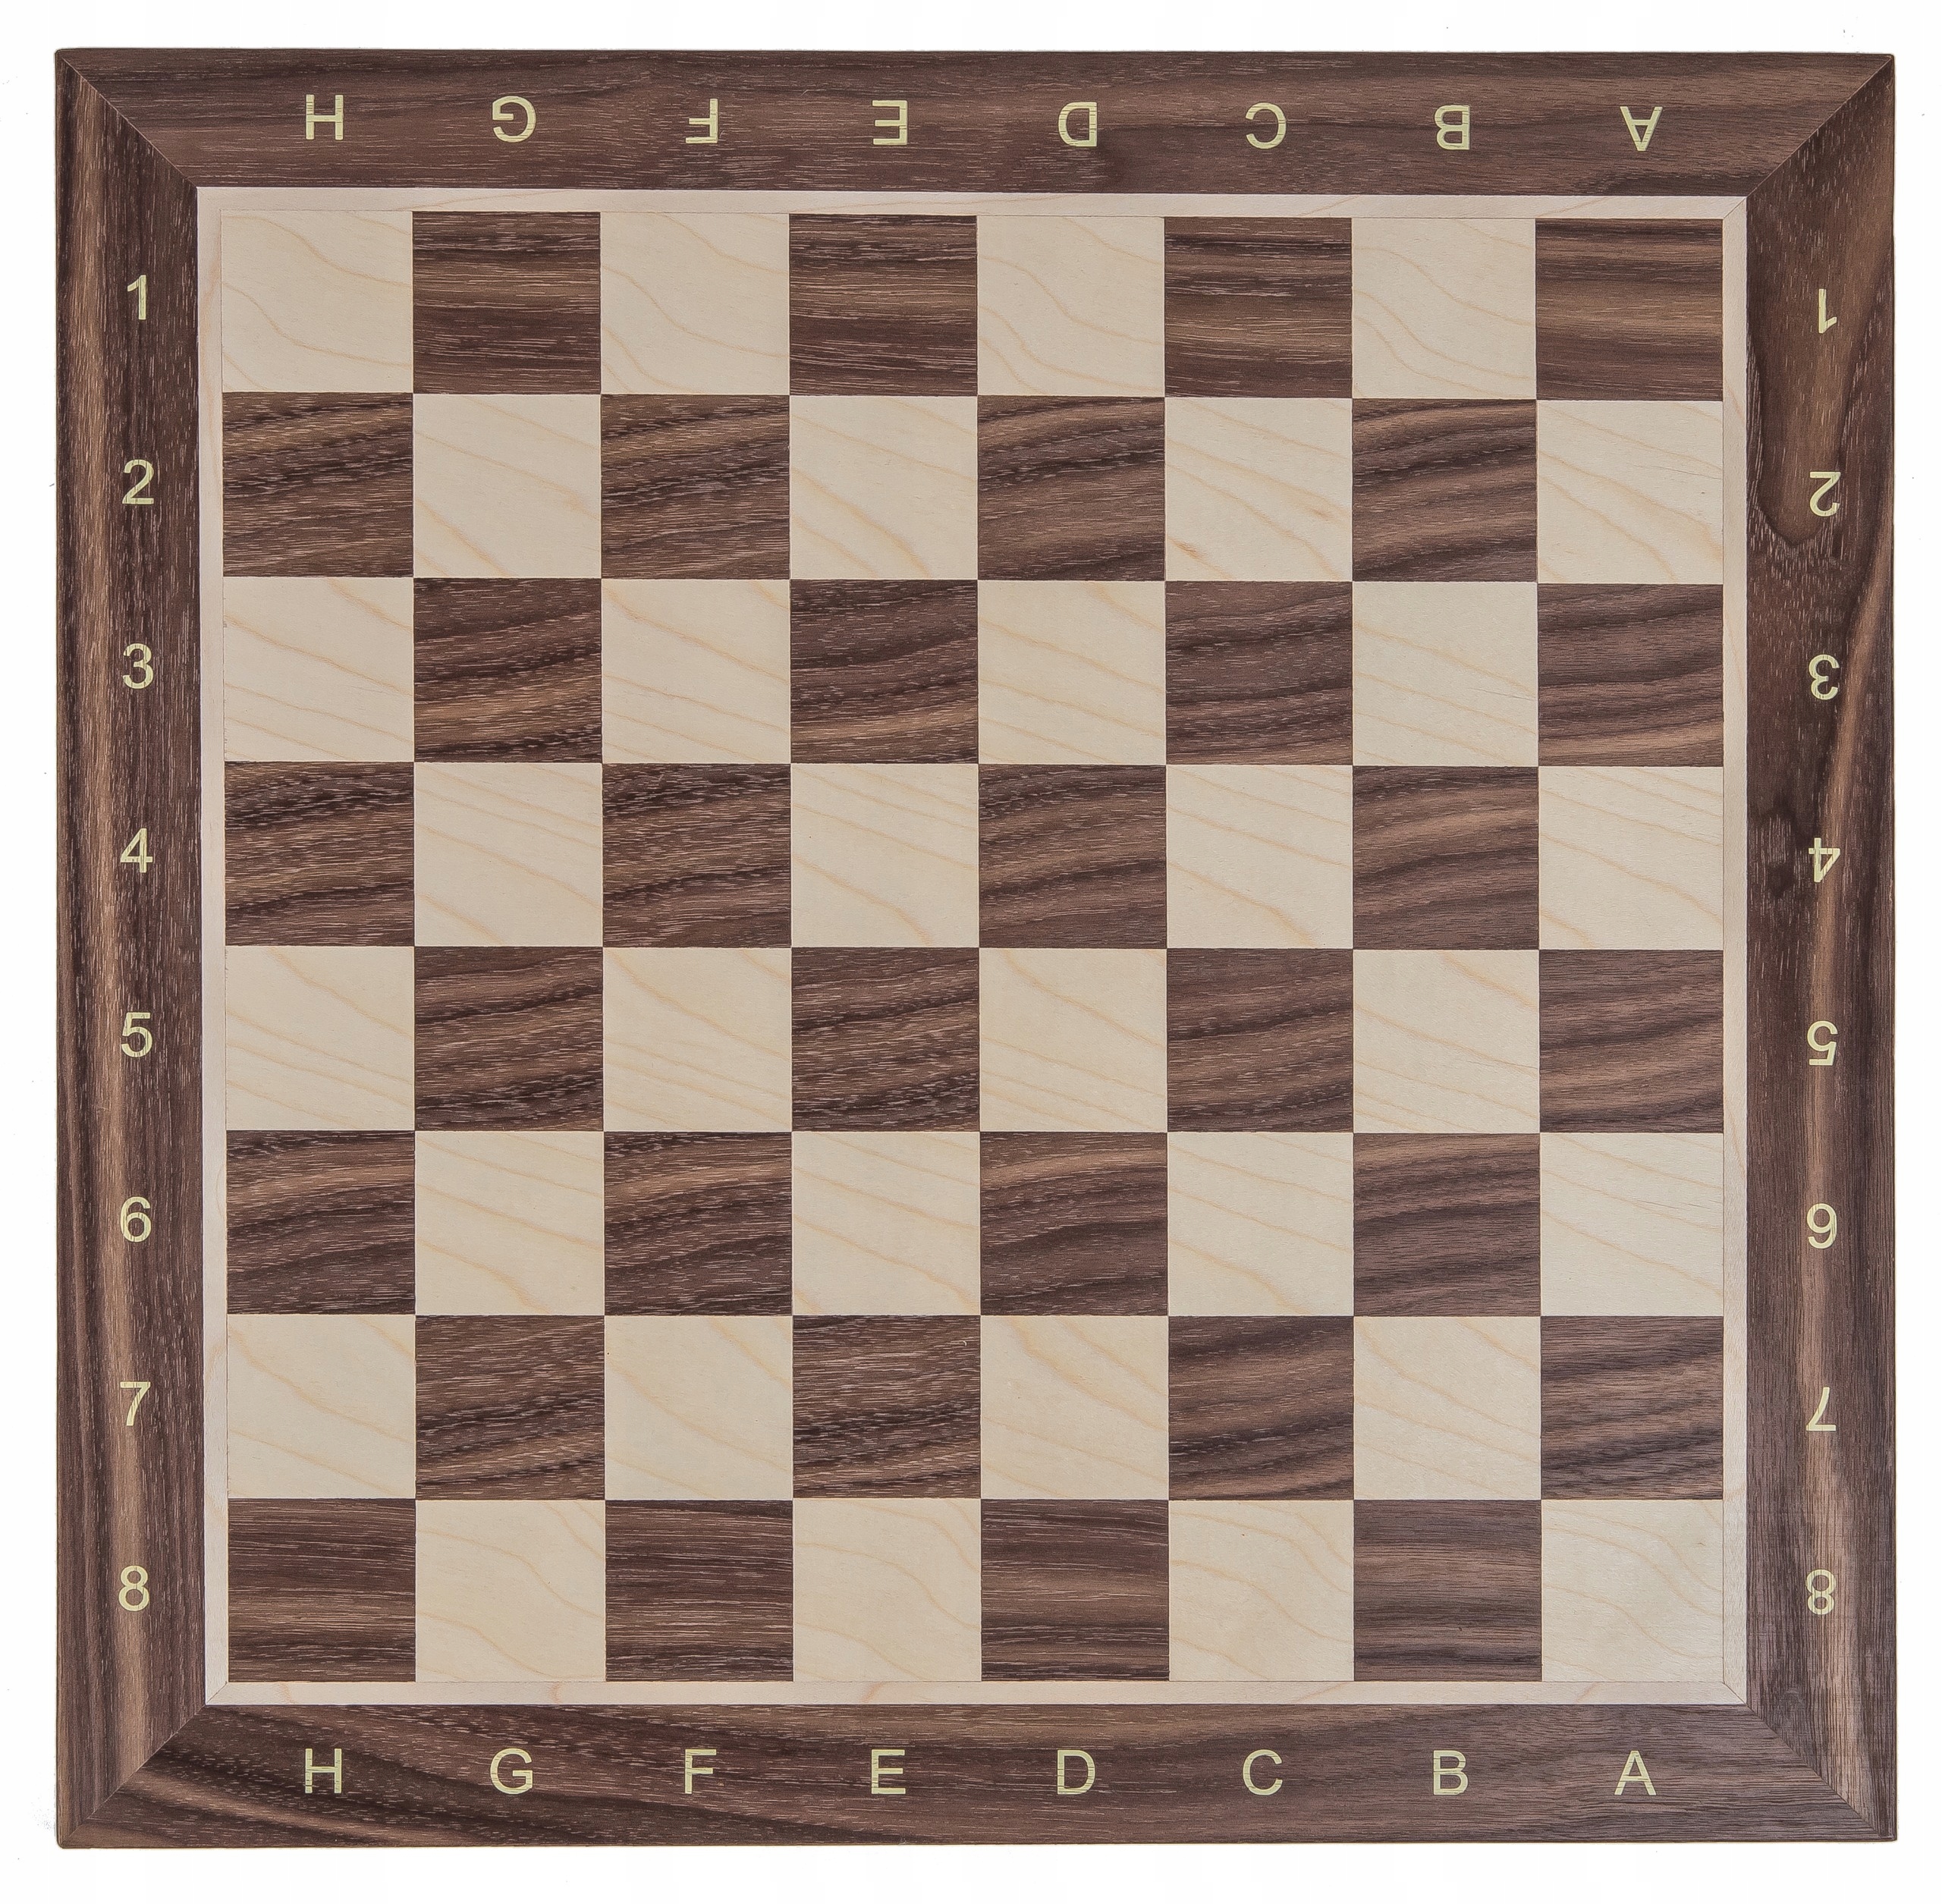 Chessboard. Чесс борд шахматная доска. Шахматная доска 43х43. DC/nr740 доска шахматная. Шахматная доска вид сверху.